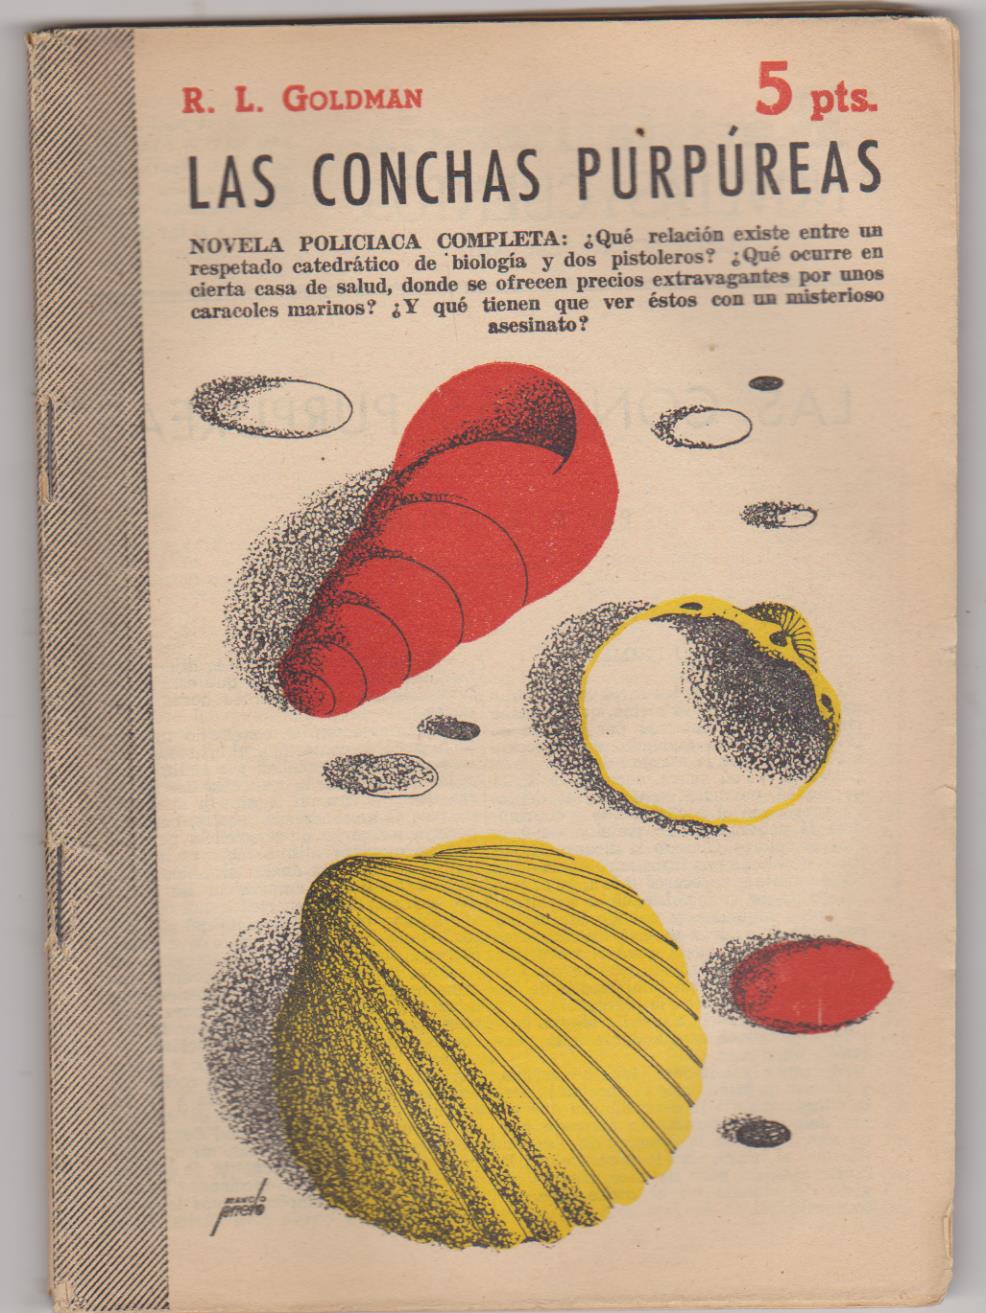 Revista Literaria nº 1153. R. L. Goldman. Las conchas purpúreas. Año 1953